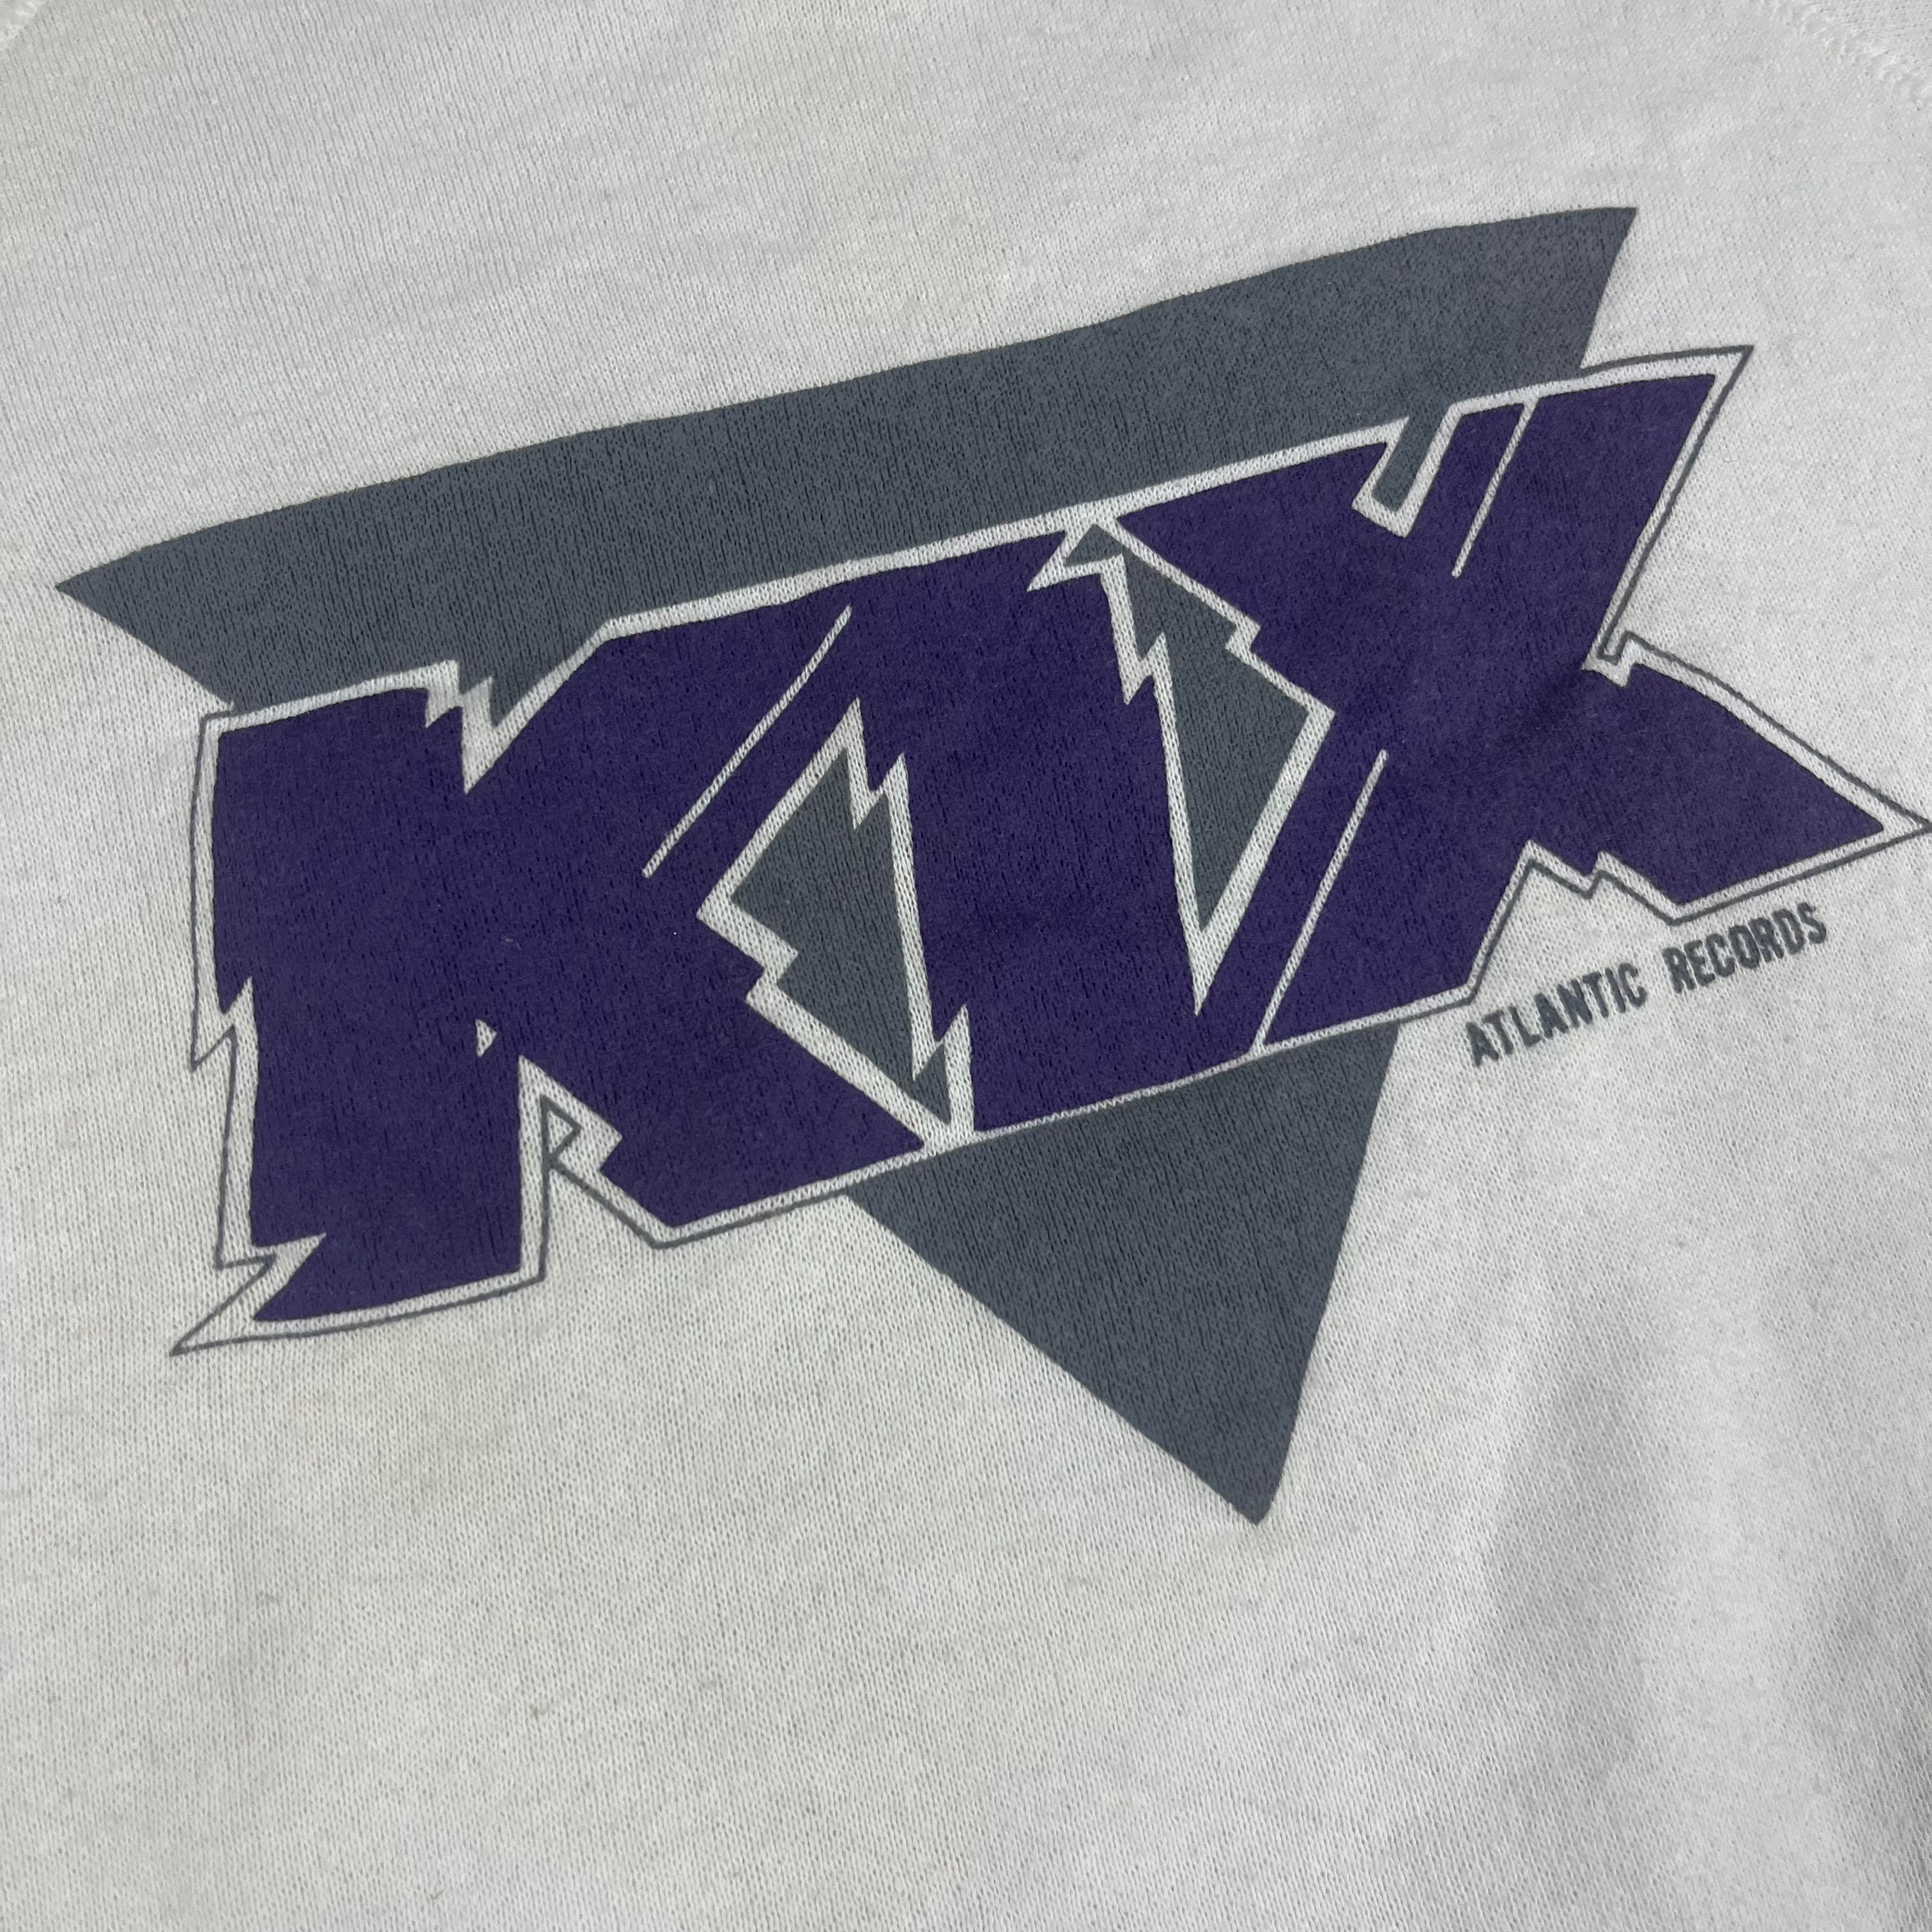 Kix Wants You - Light - Kix - T-Shirt